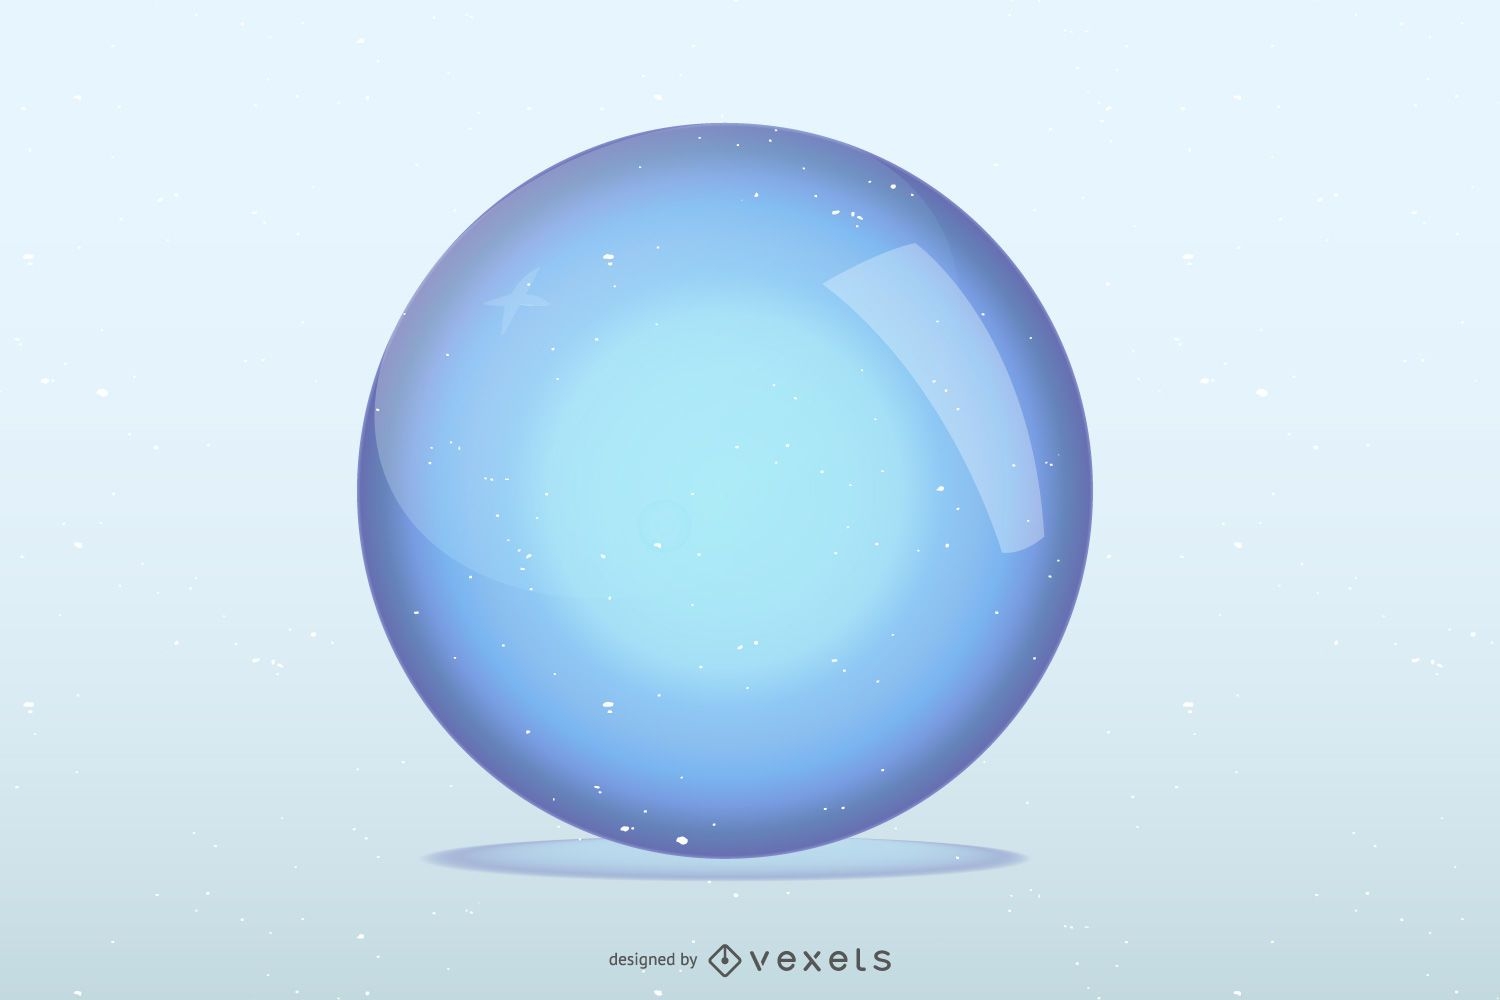 Big blue glass sphere